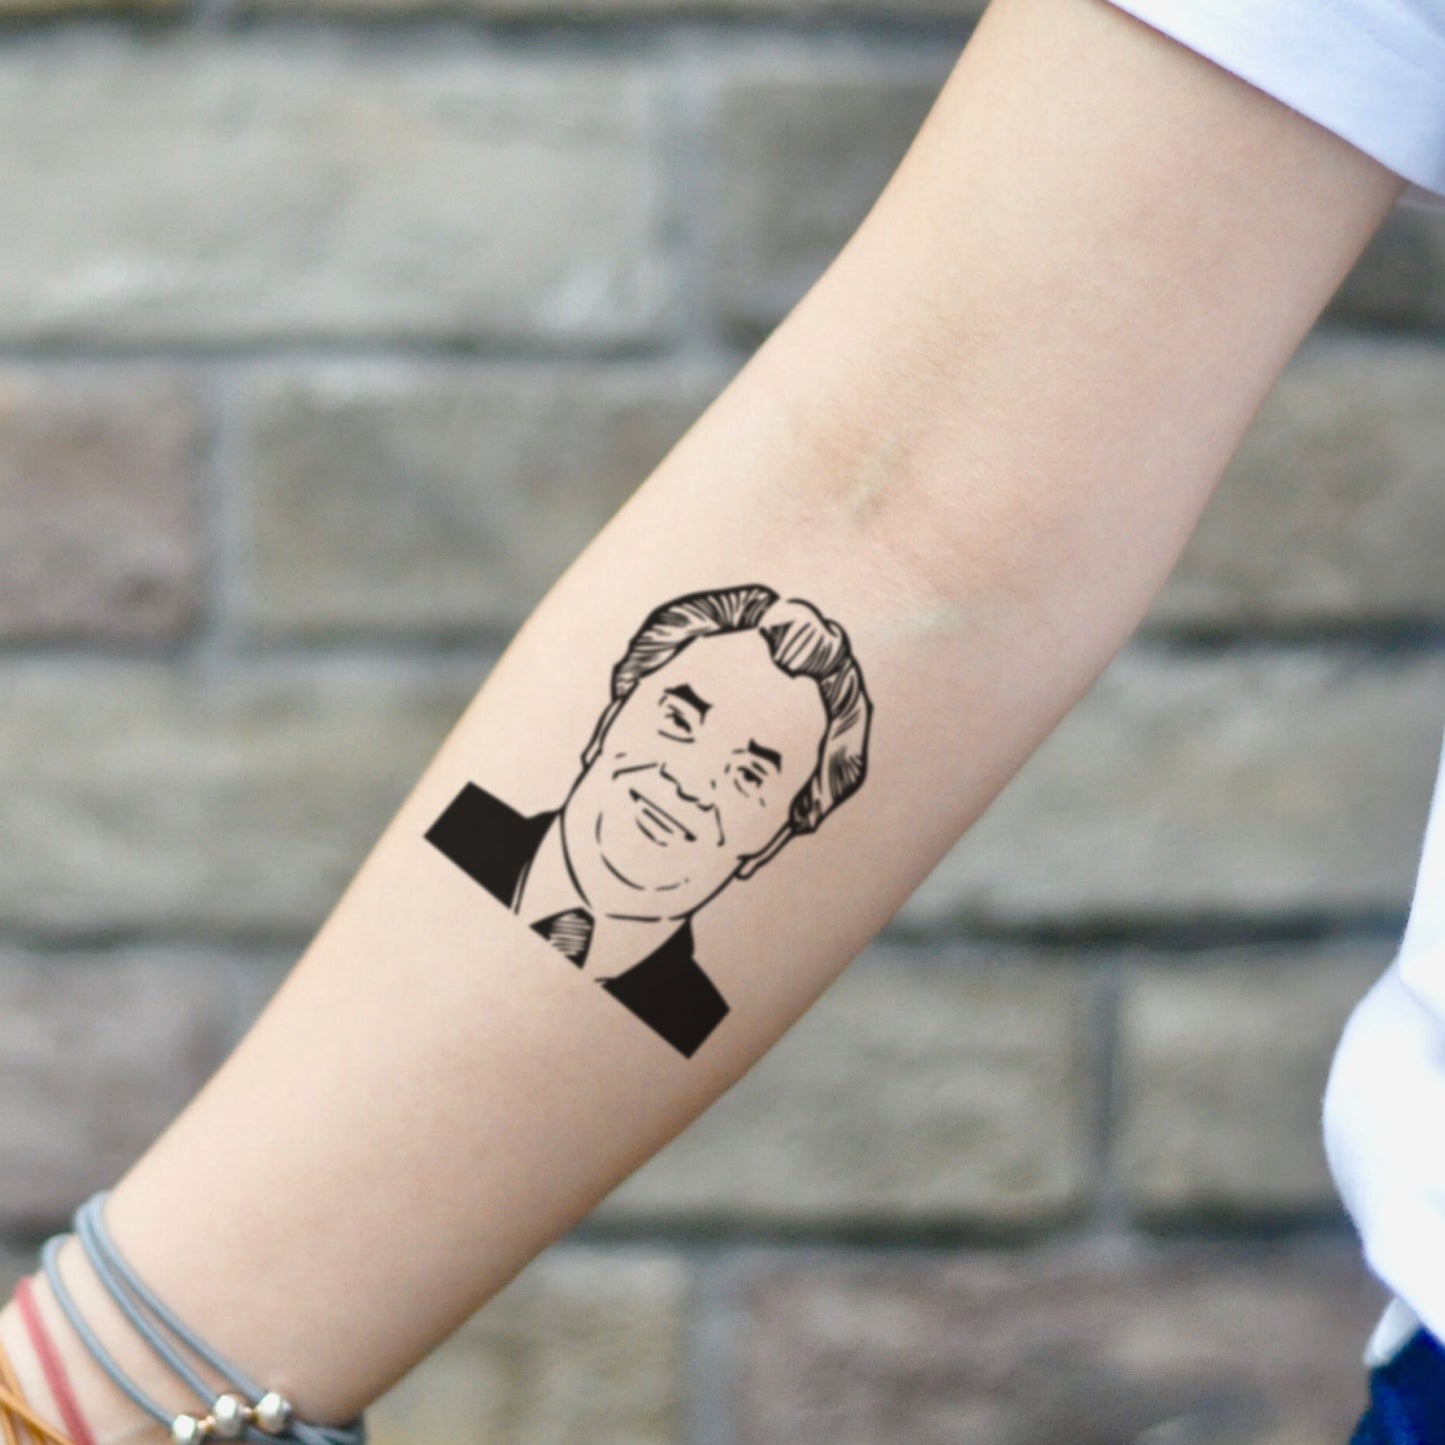 fake small john gotti portrait temporary tattoo sticker design idea on inner arm